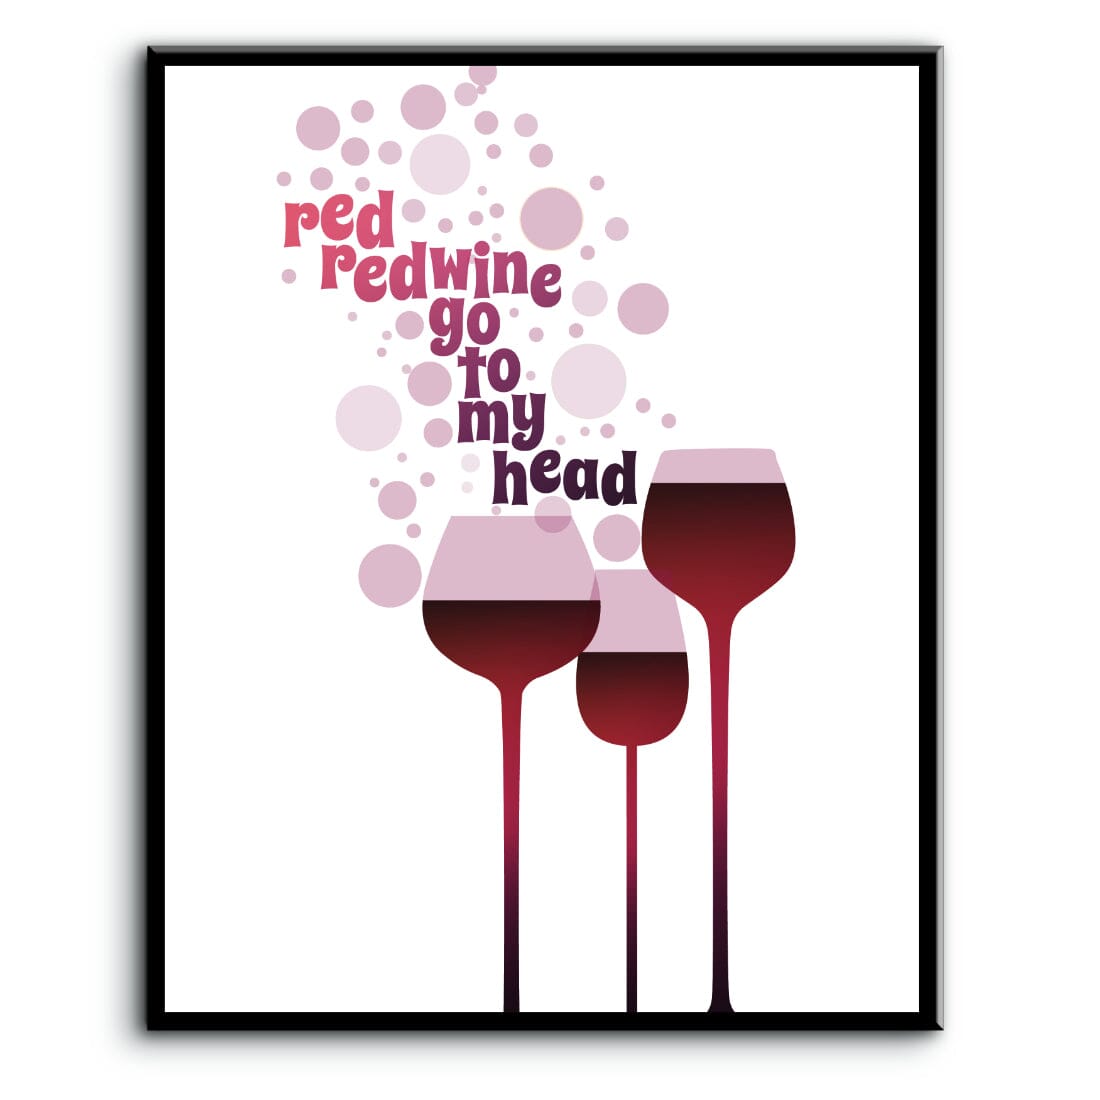 Red Red Wine by Neil Diamond - Music Quote Poster Art Song Lyrics Art Song Lyrics Art 8x10 Plaque Mount 